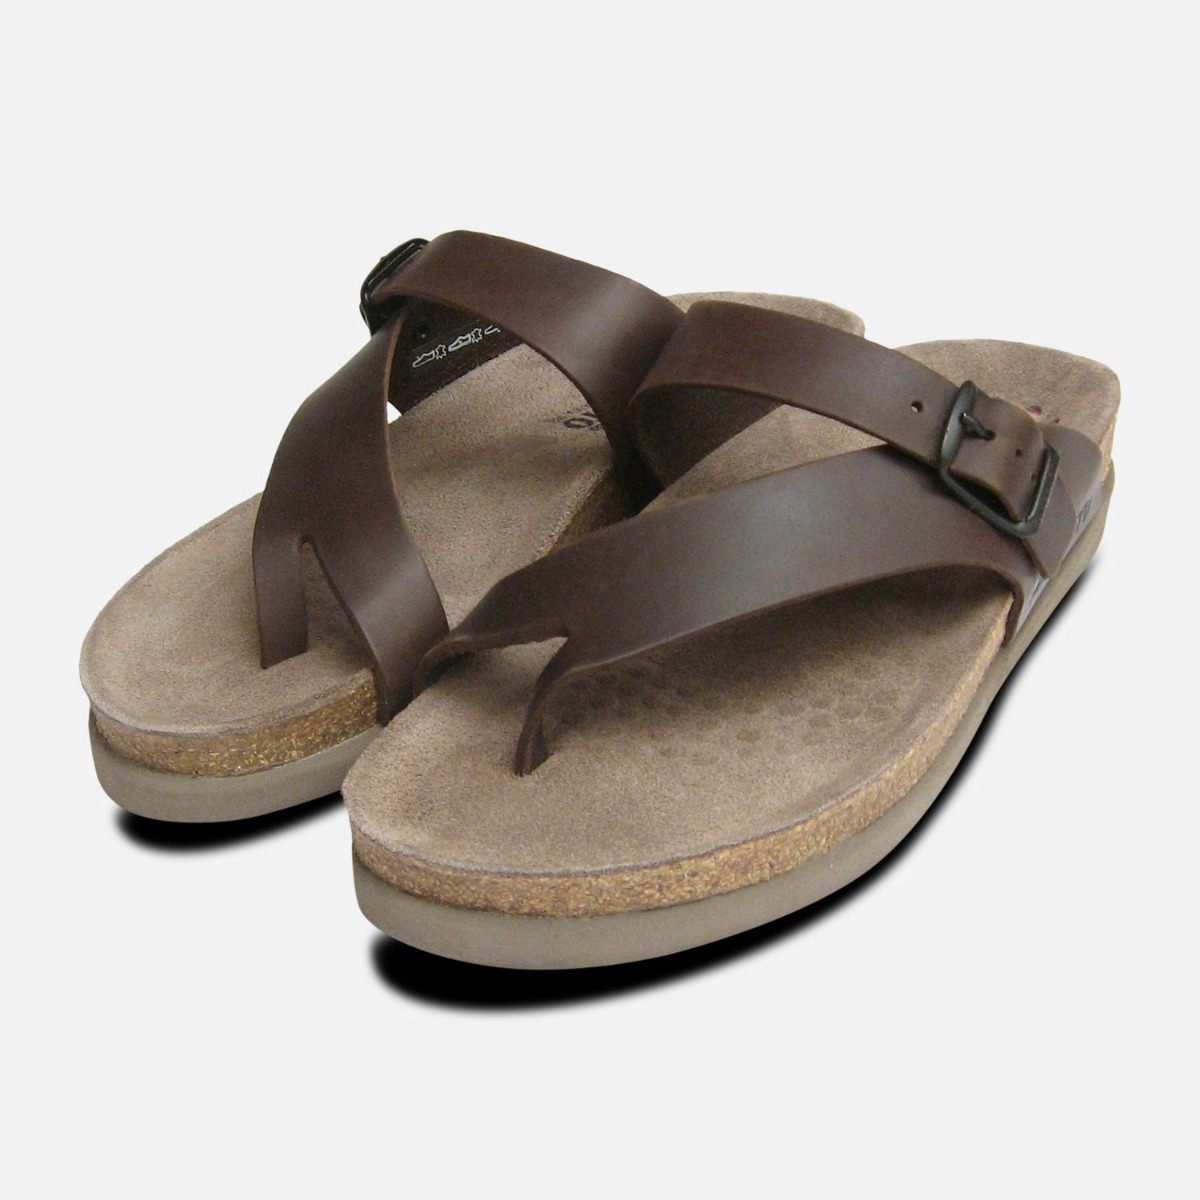 mephisto leather sandals